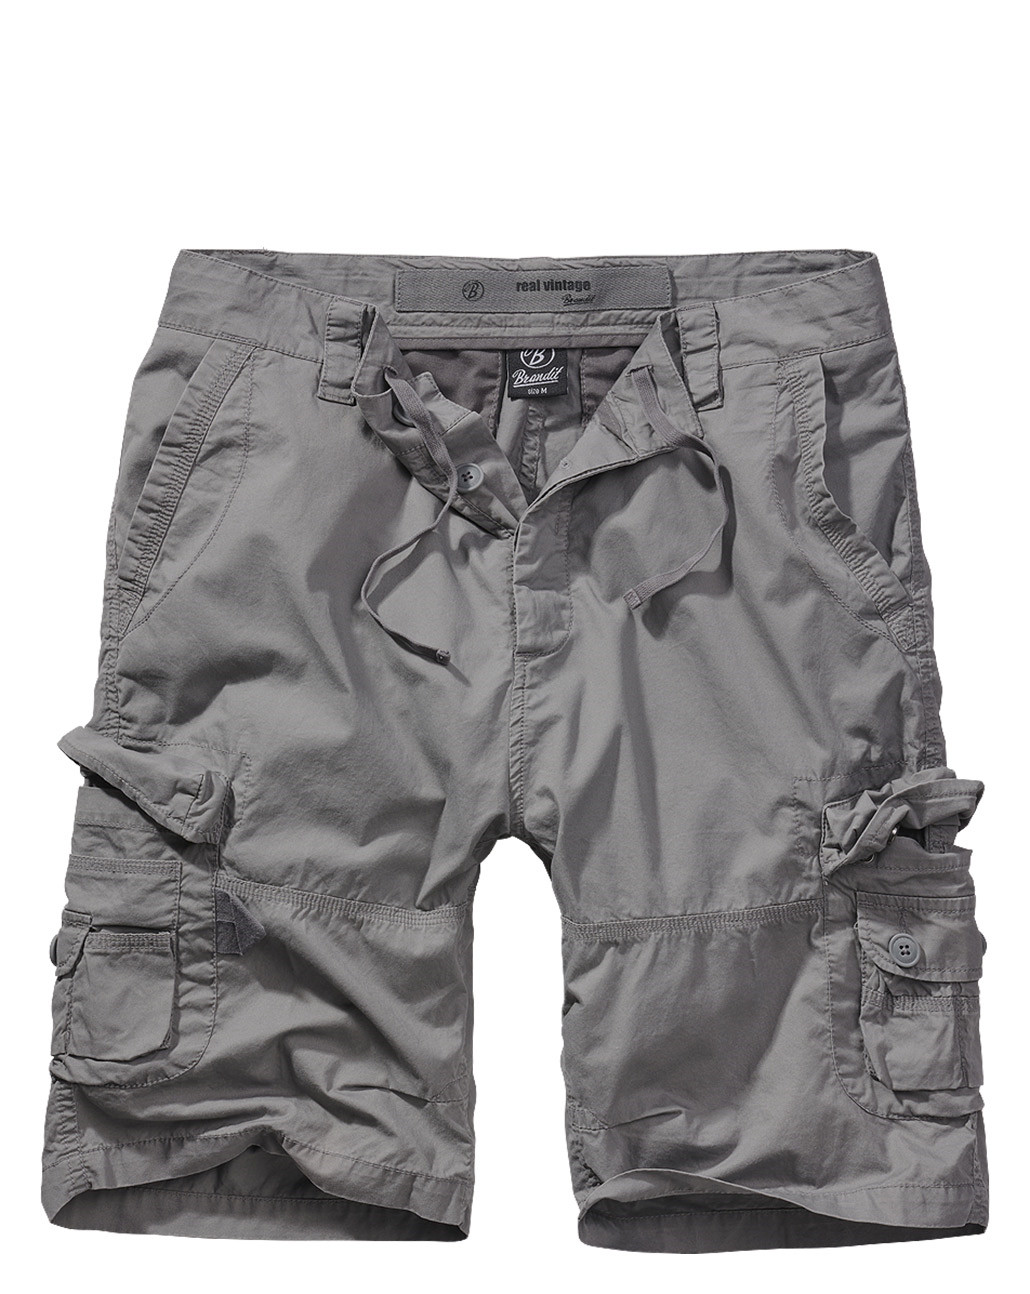 Brandit Ty Shorts (Charcoal, L)